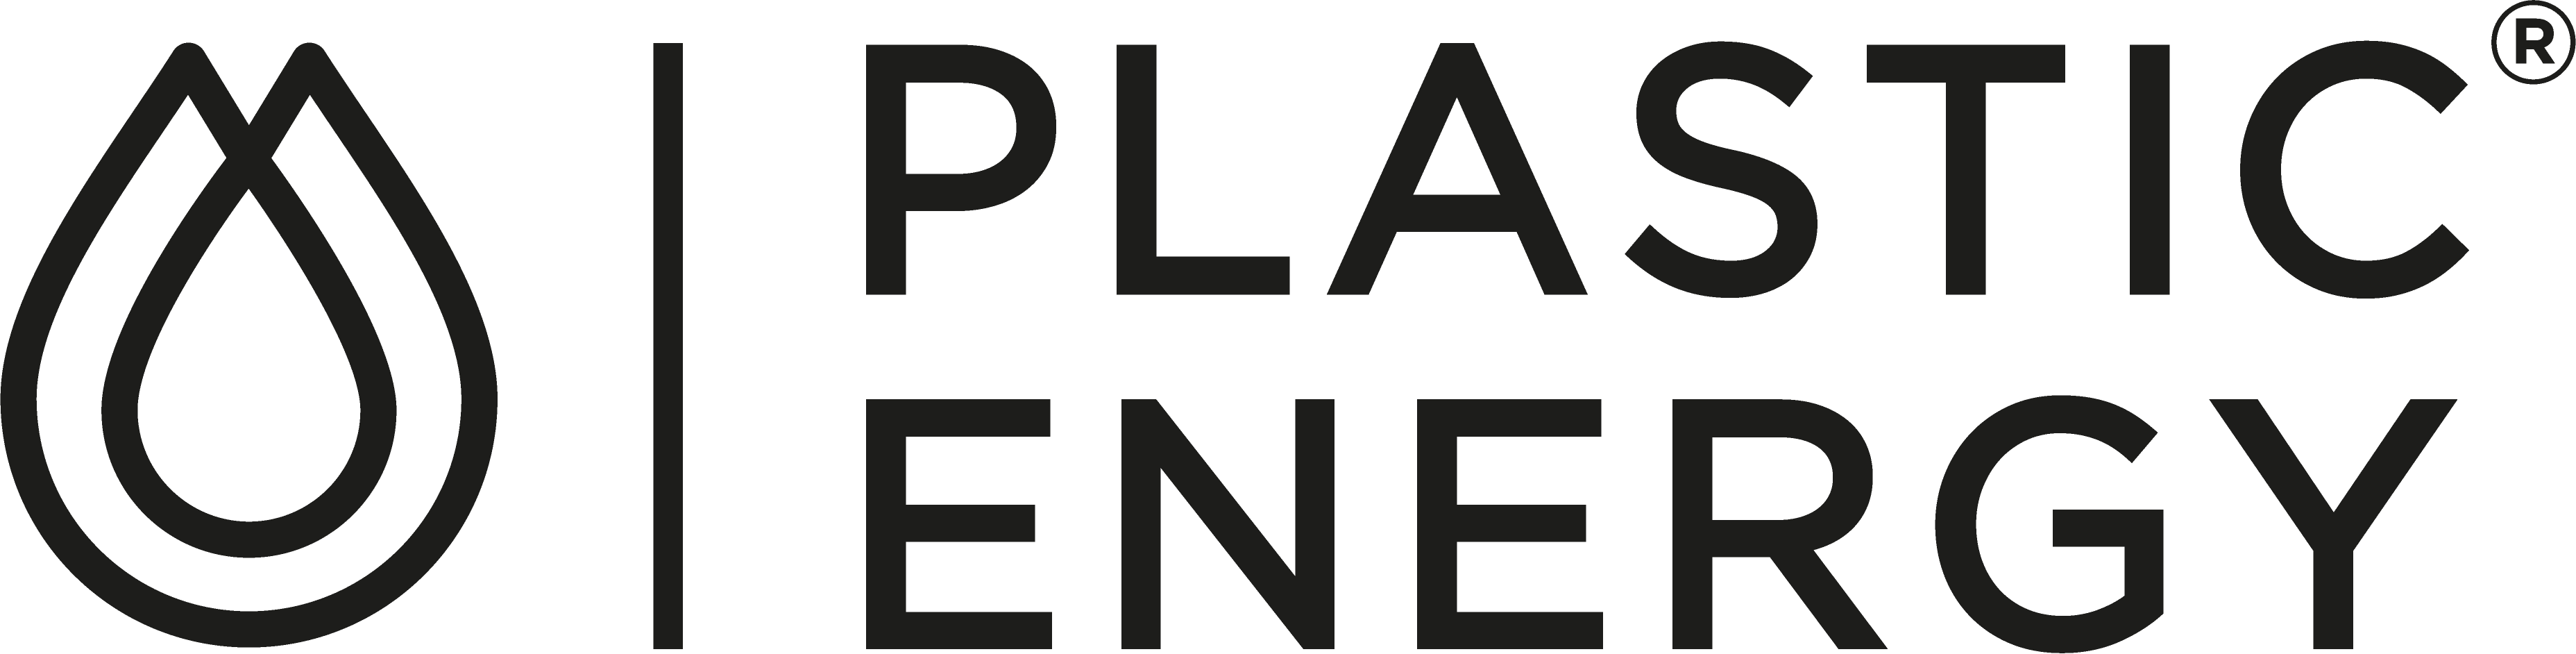 Plastic Energy Logo Black (002)